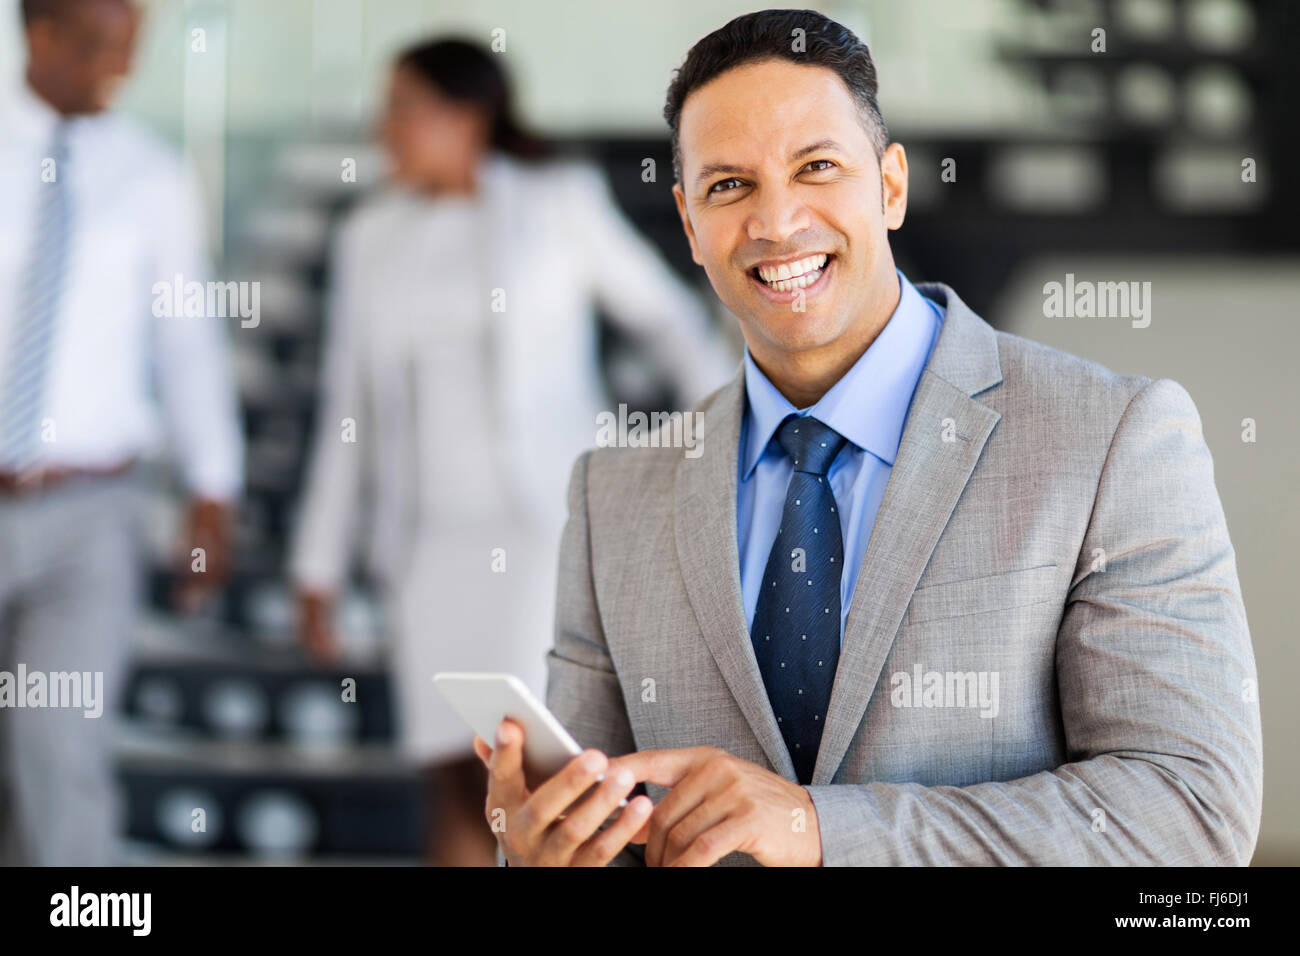 Smiling middle aged businessman using smart phone Banque D'Images